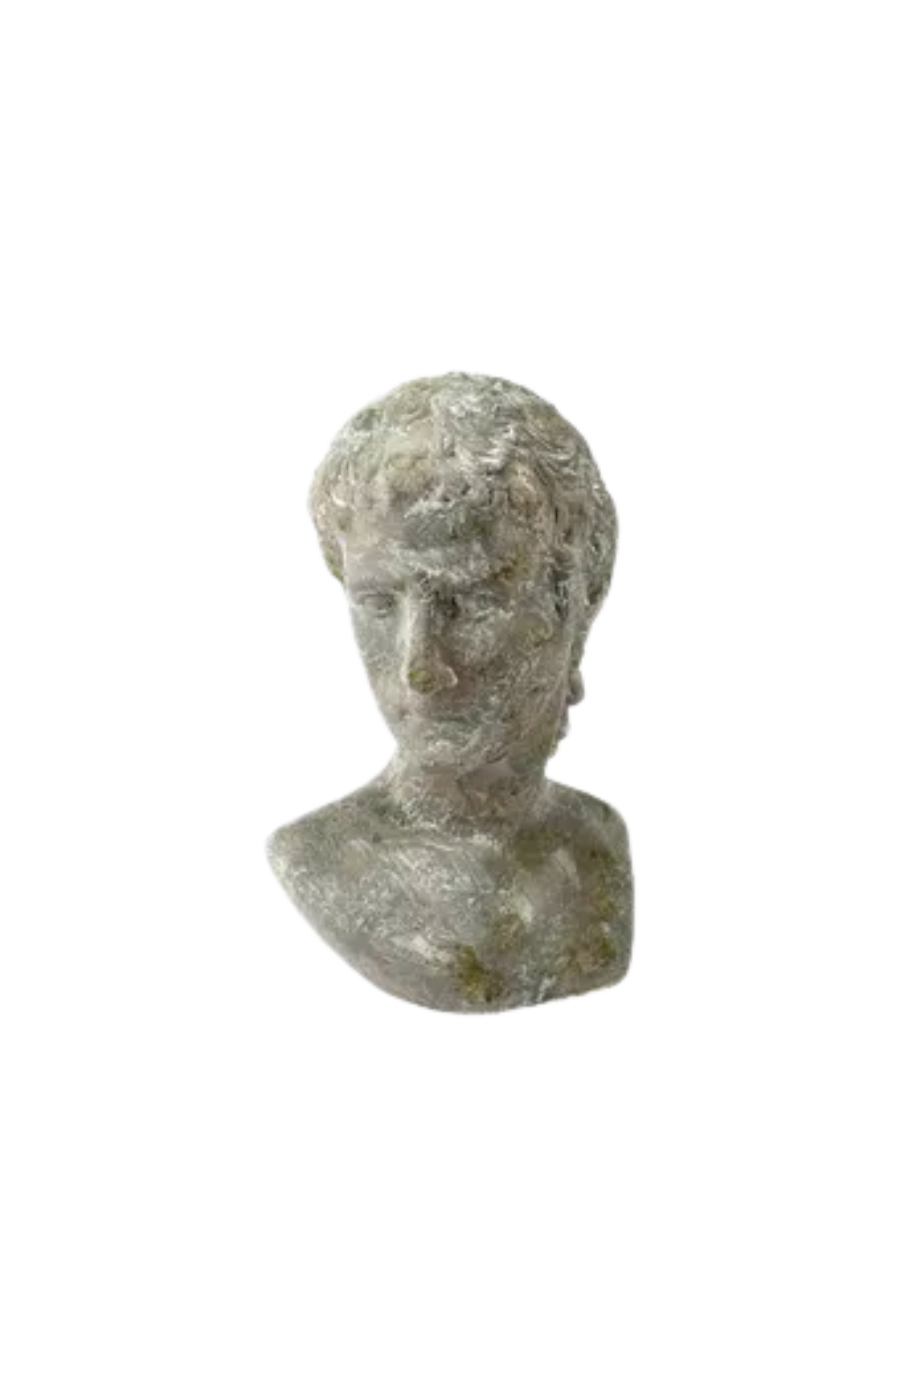 Home Office Vietri Carrara French Country Grey Ceramic Roman Bust